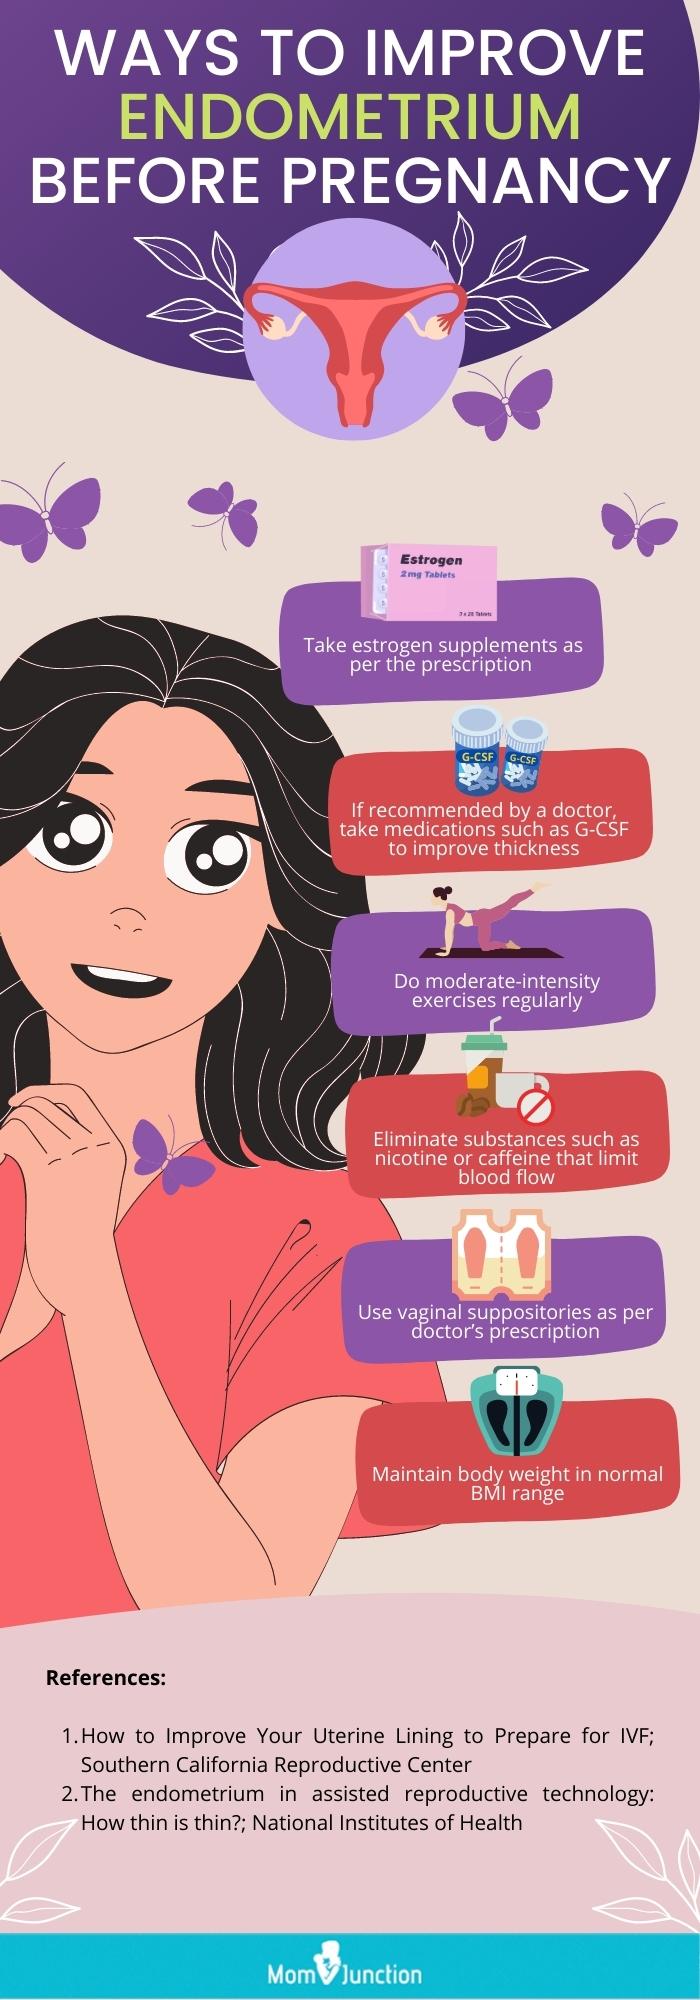 ways to improve endometrium before pregnancy (infographic)